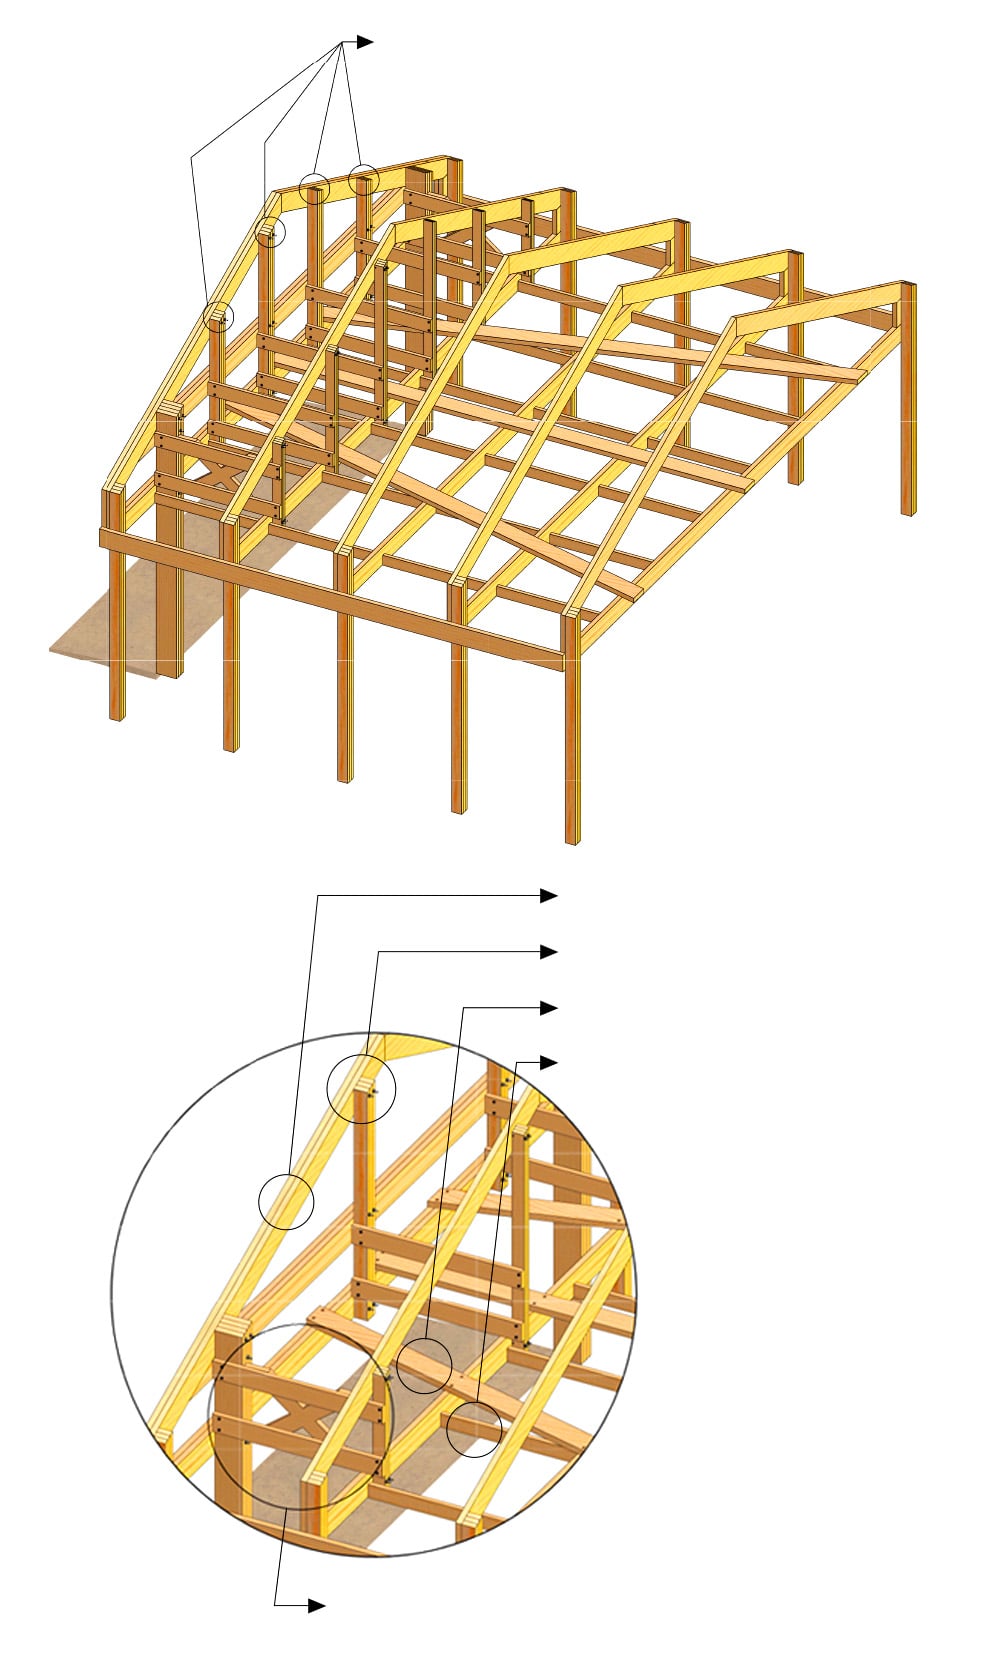 Diagram showing endwall bracing on a wood frame